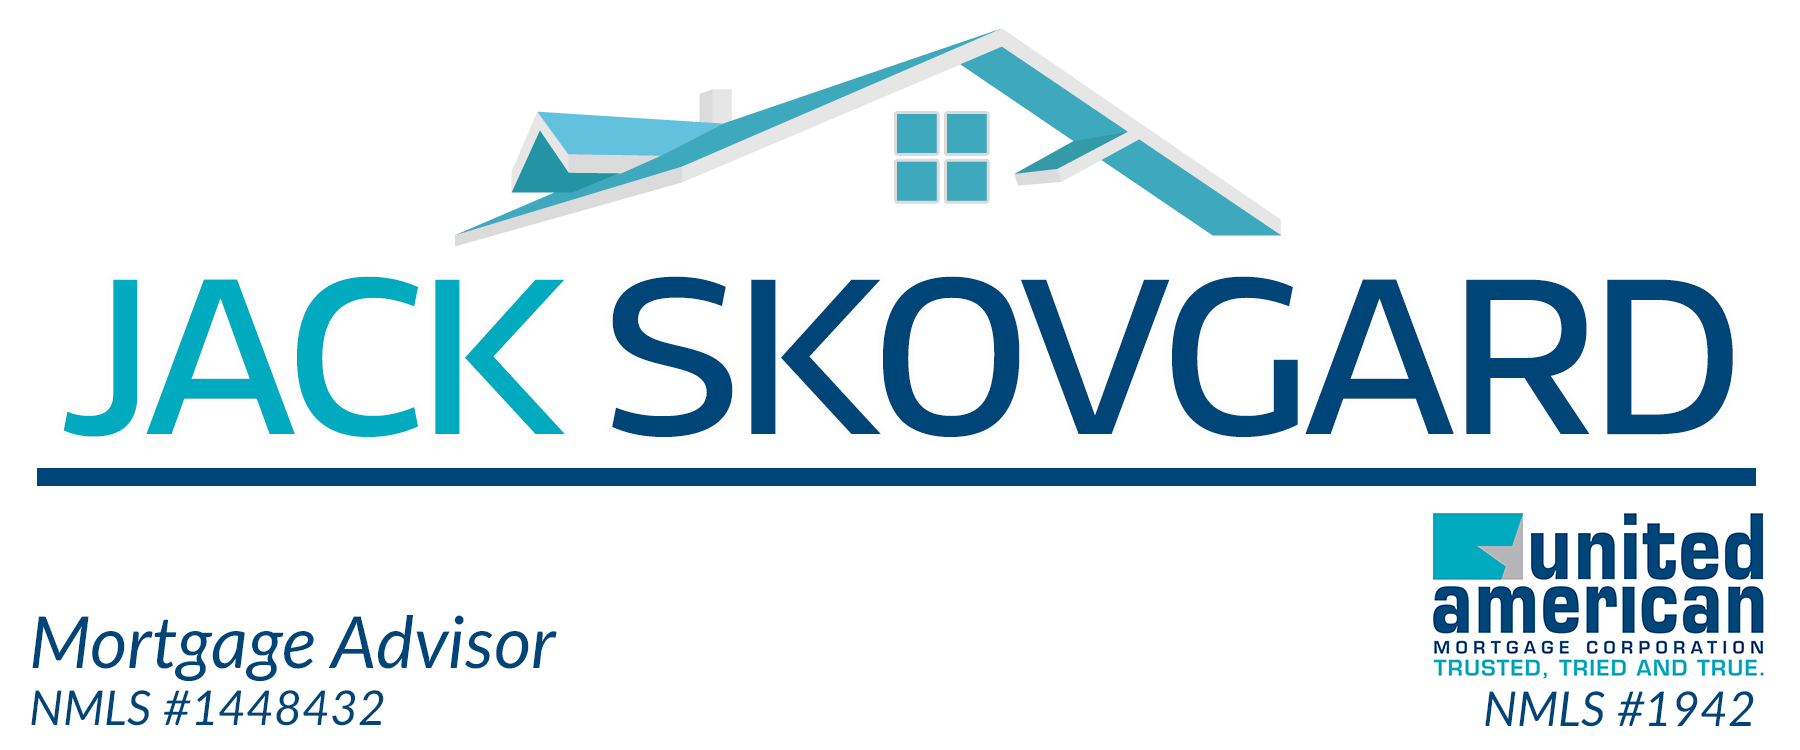 Jack Skovgard Logo